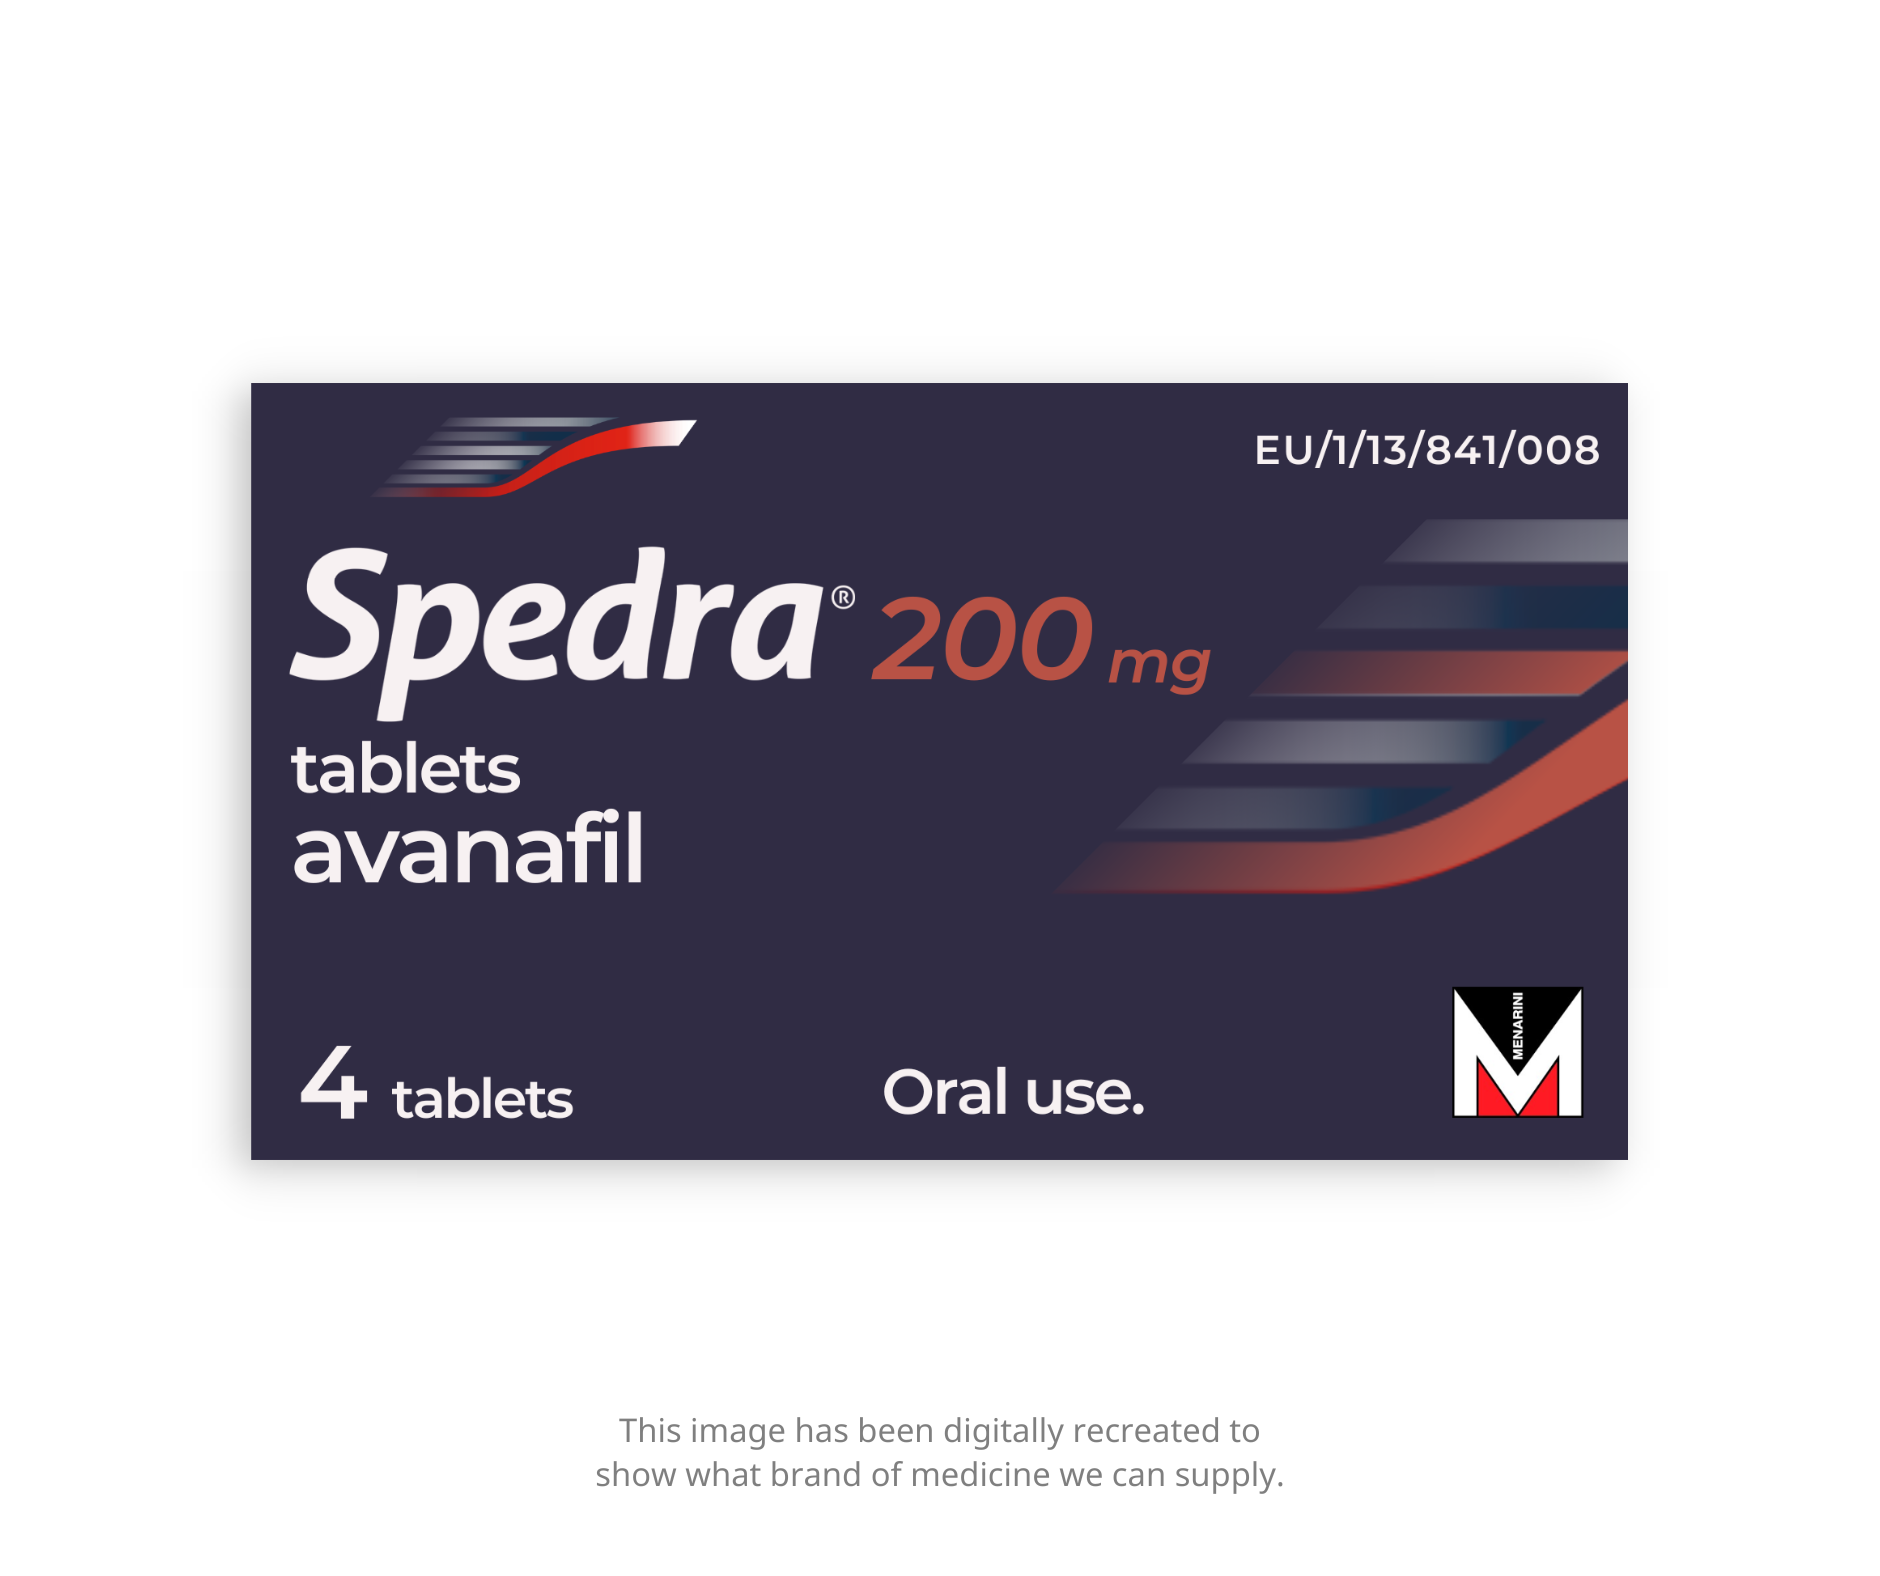 Spedra Avanafil example packaging